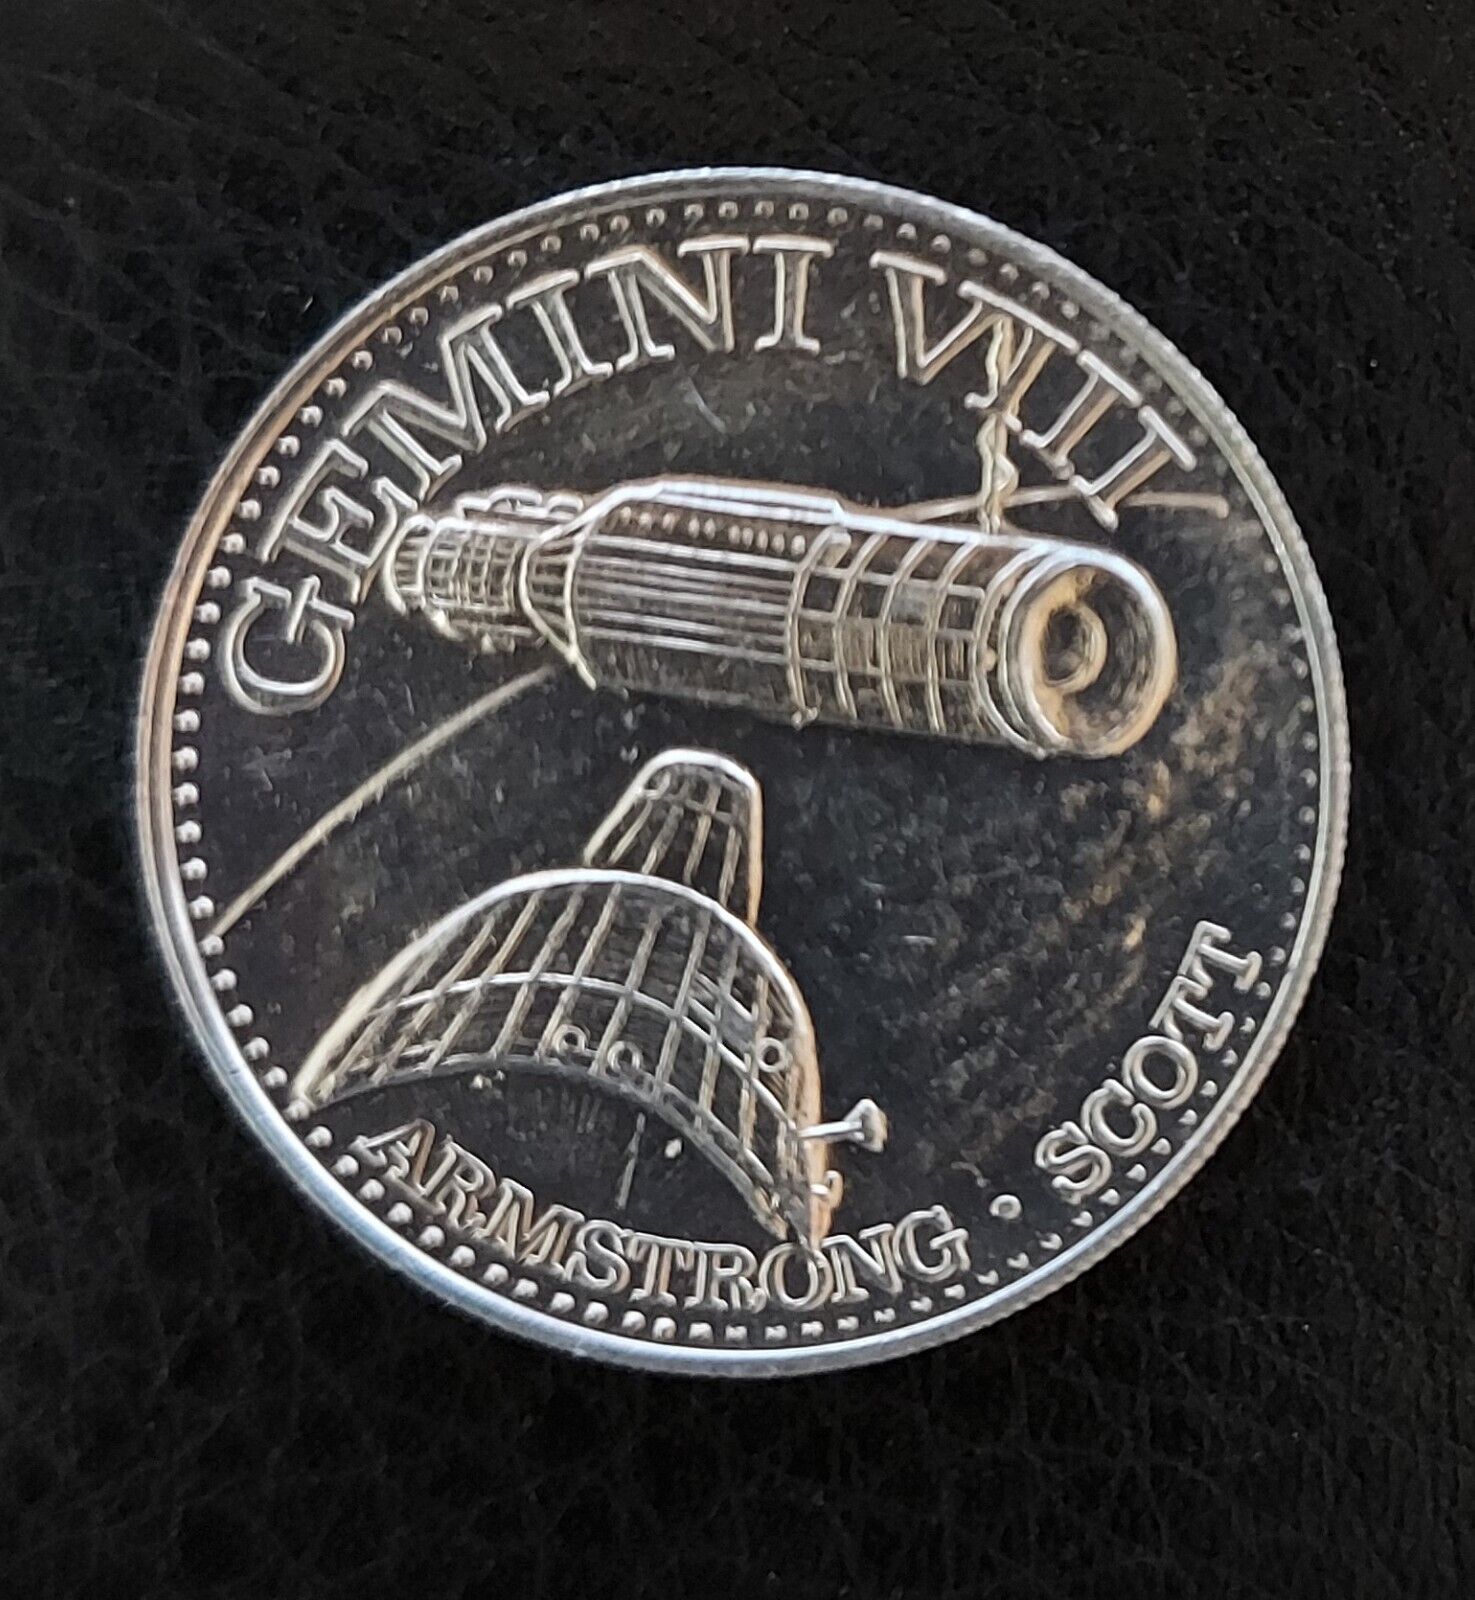 GEMINI VIII Mission NASA Vintage Space Program Medallion Medal Challenge Coin